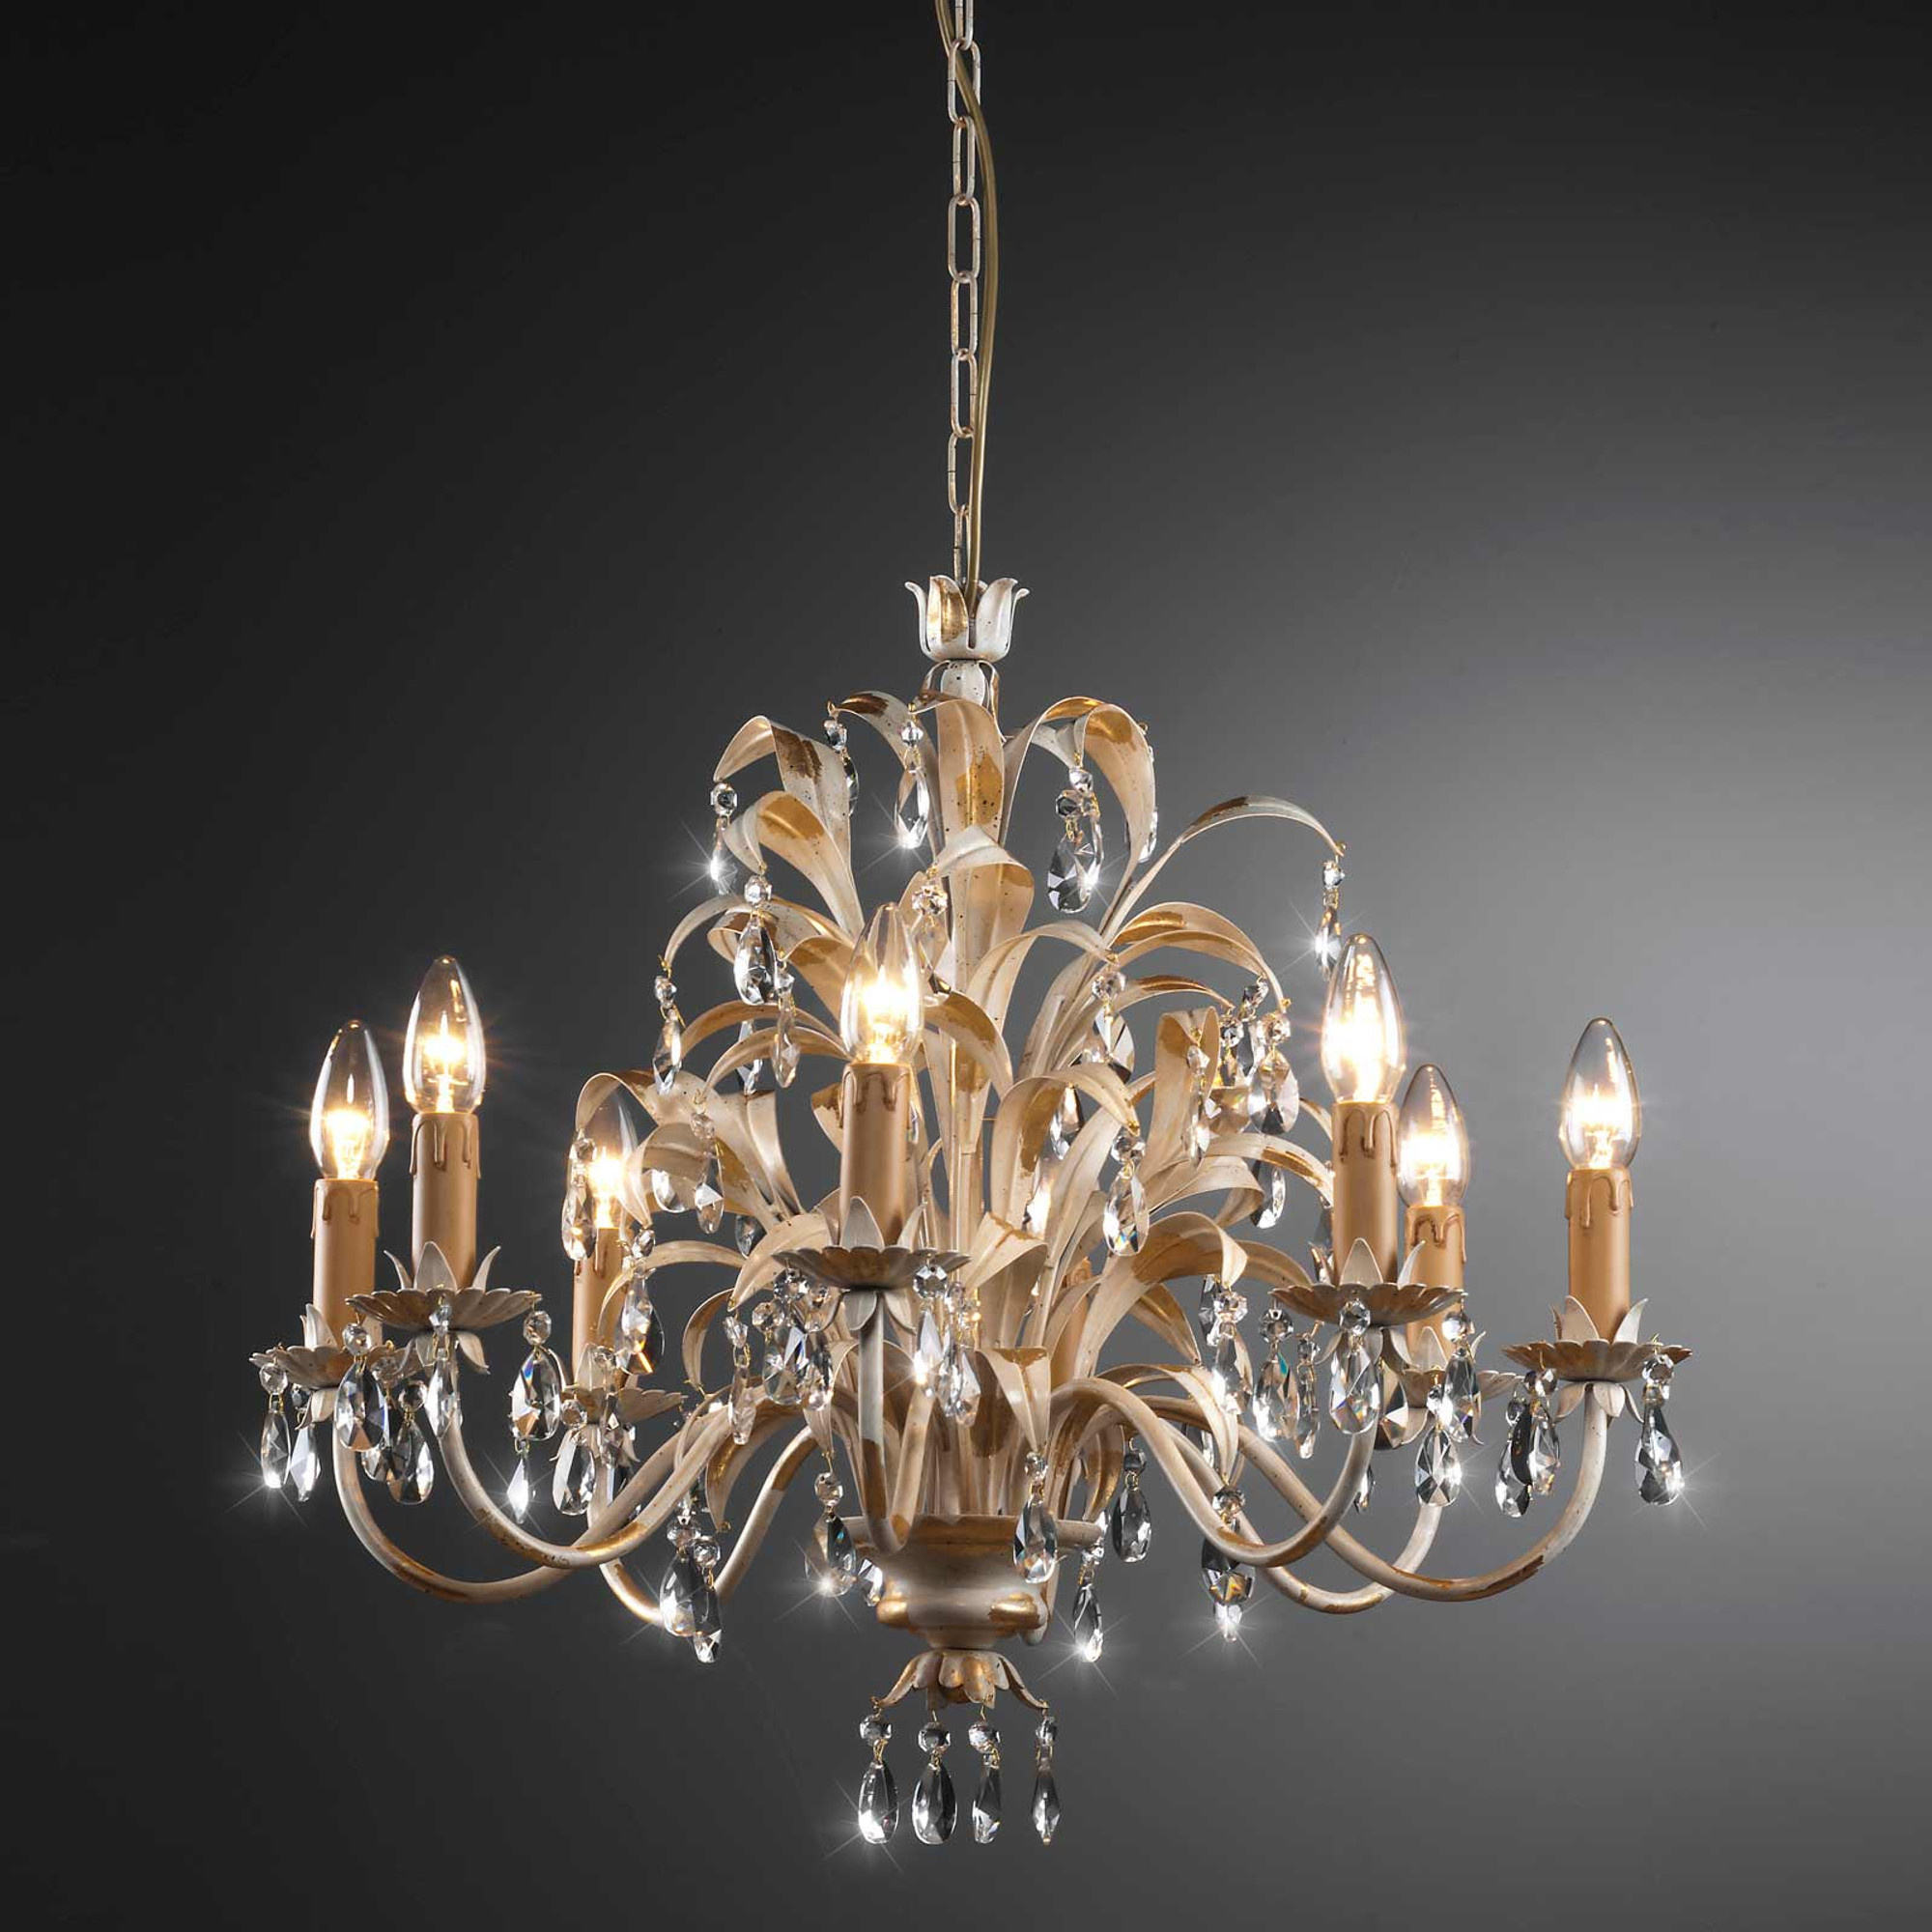 Ferro Luce chandelier, Candelabra style, Italian craftsmanship, Unique lighting fixture, 2000x2000 HD Handy